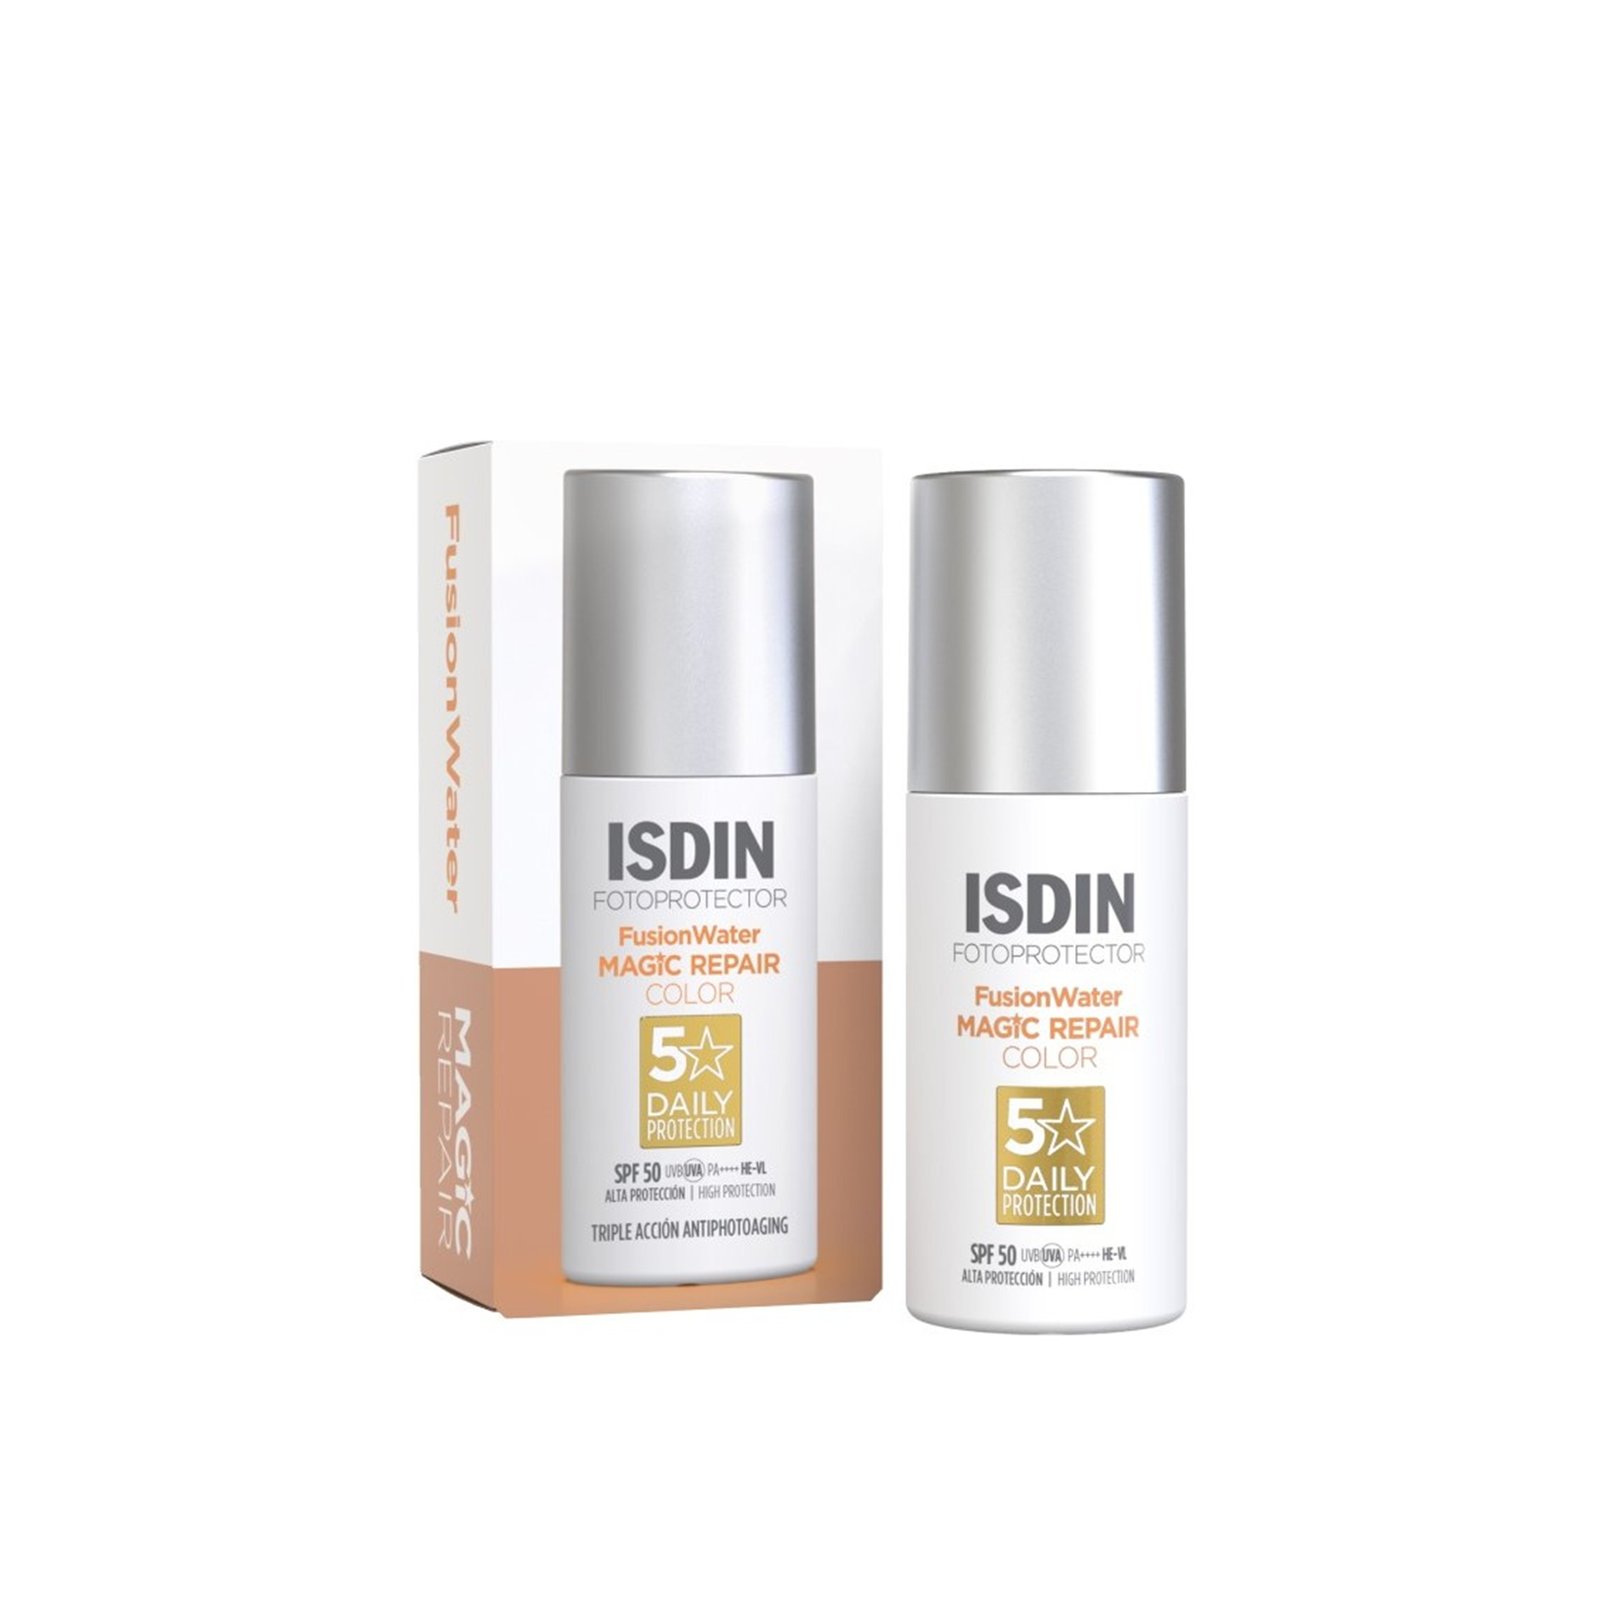 ISDIN Fotoprotector Fusion Water Magic Repair Color Sunscreen SPF50 50ml (1.69floz)